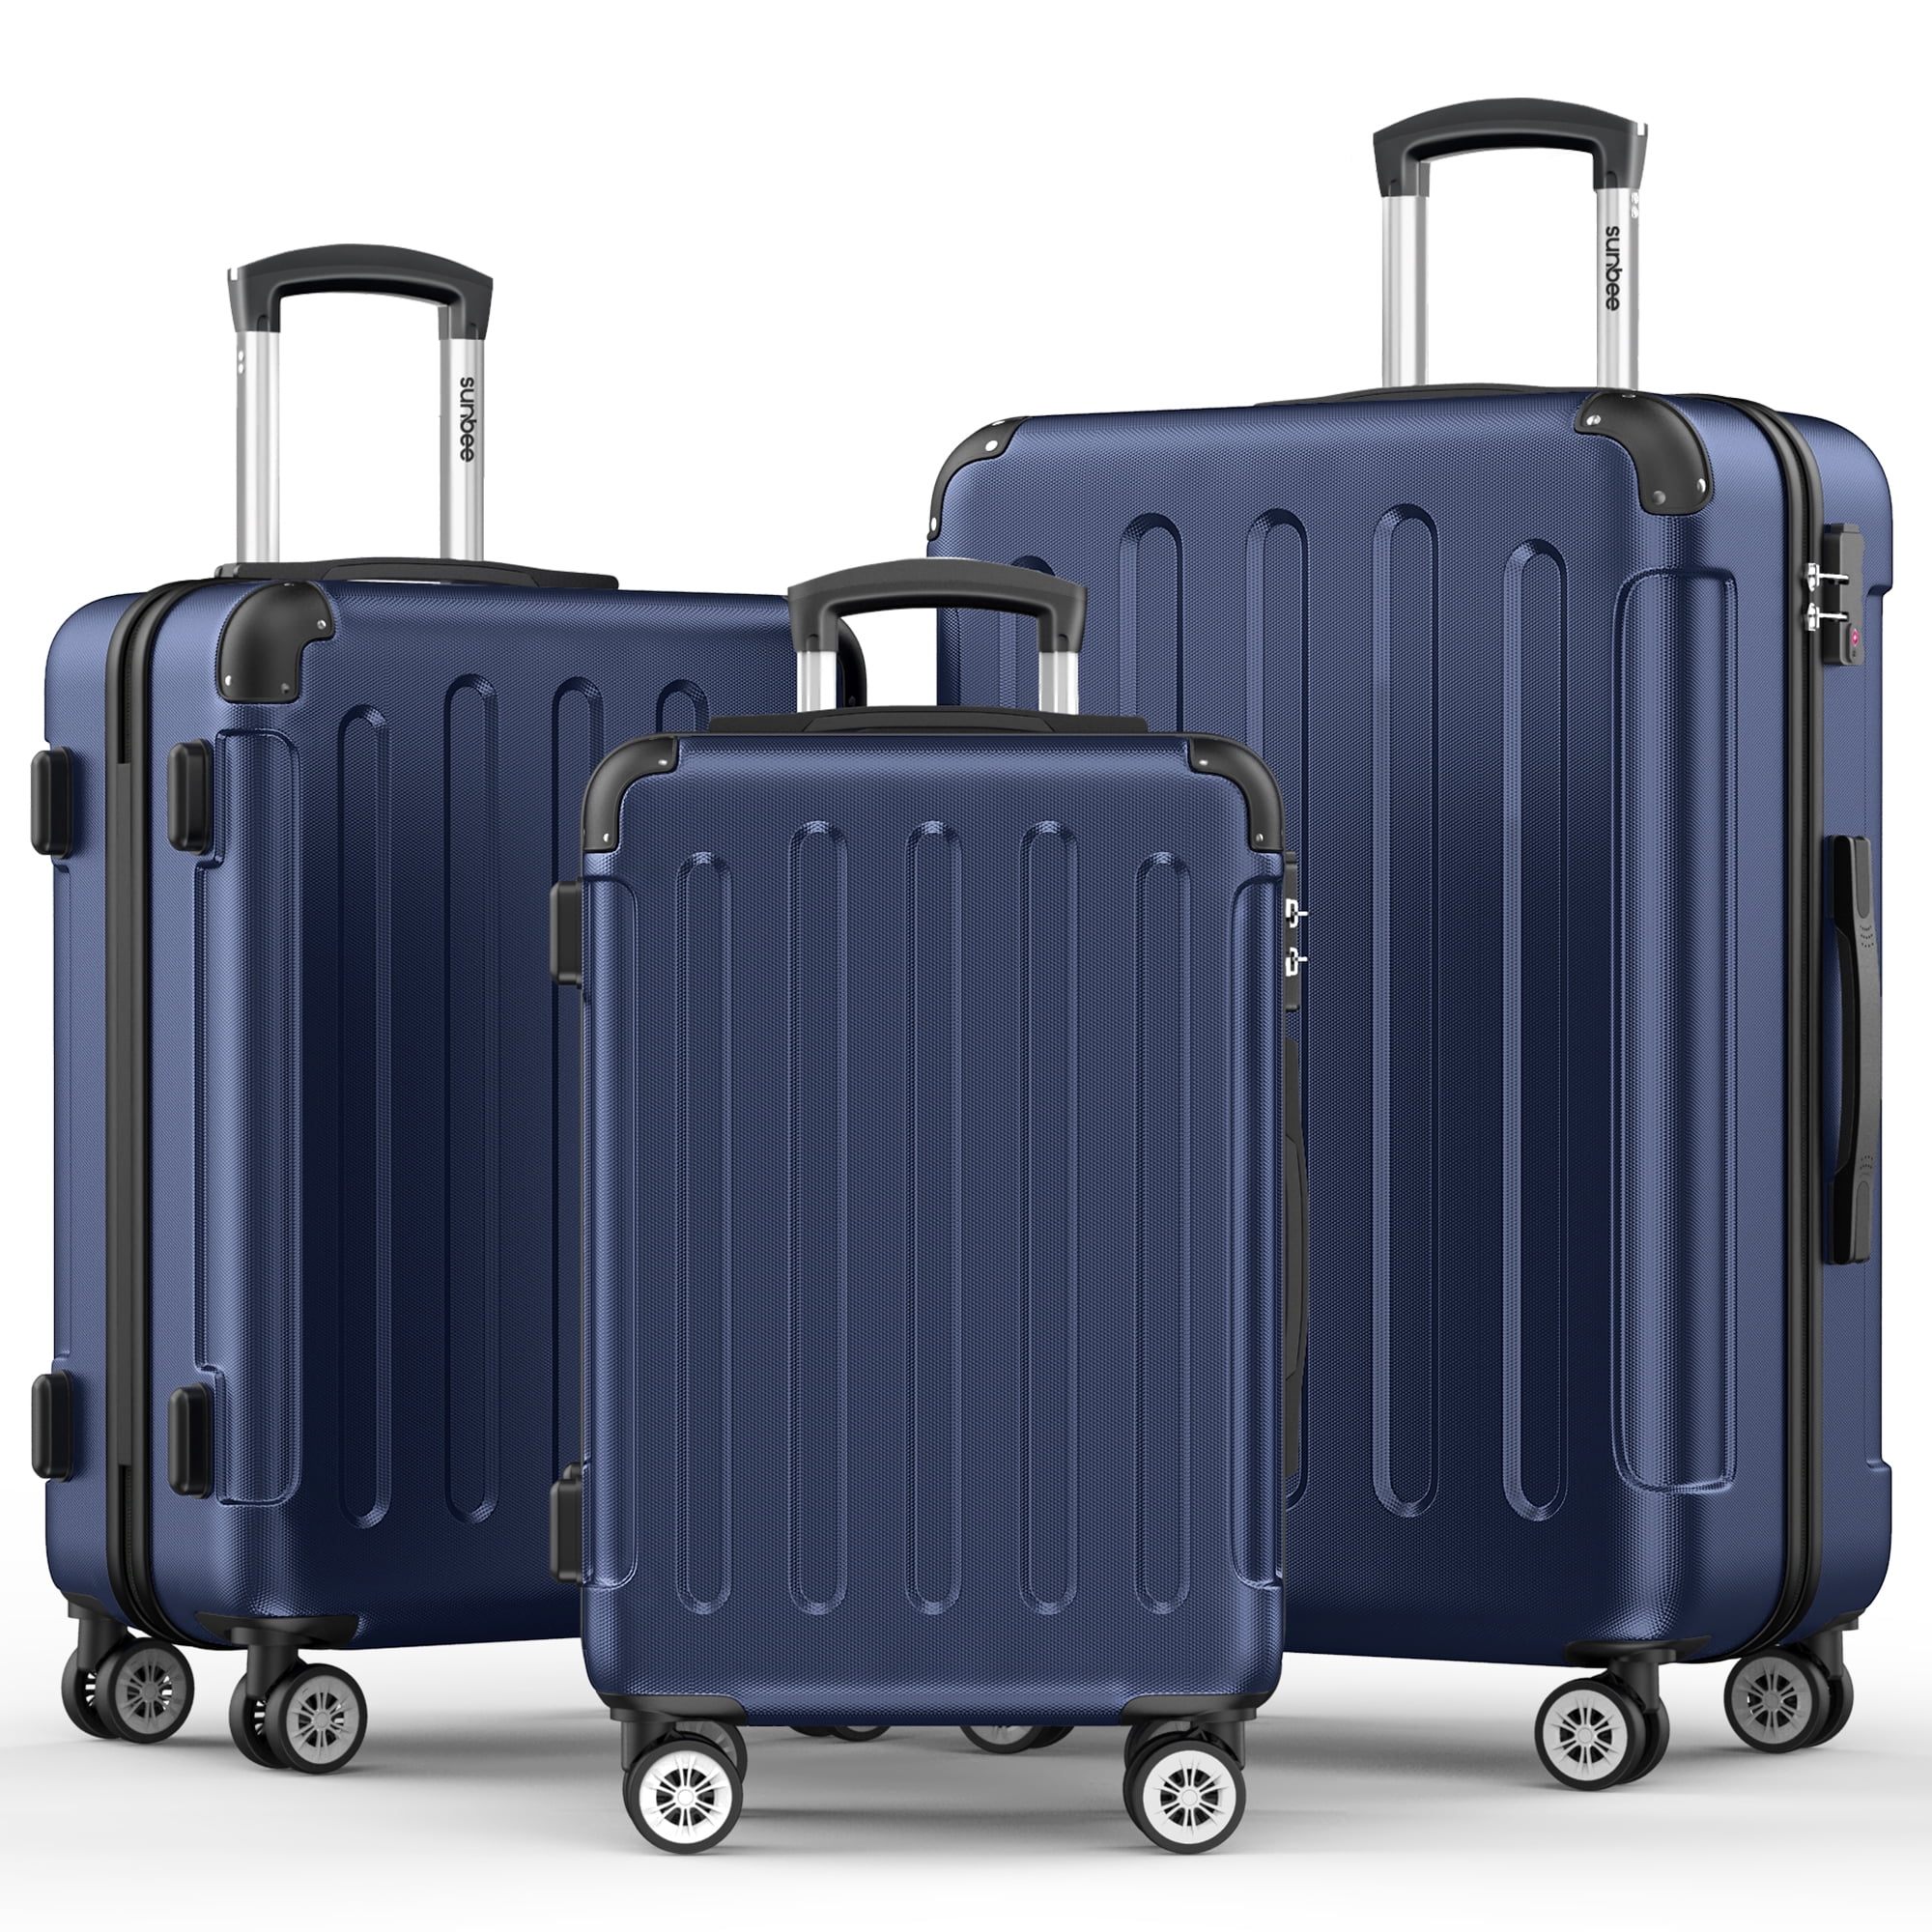 Sunbee 3 Piece Luggage Sets Hardshell Lightweight Suitcase with TSA ...